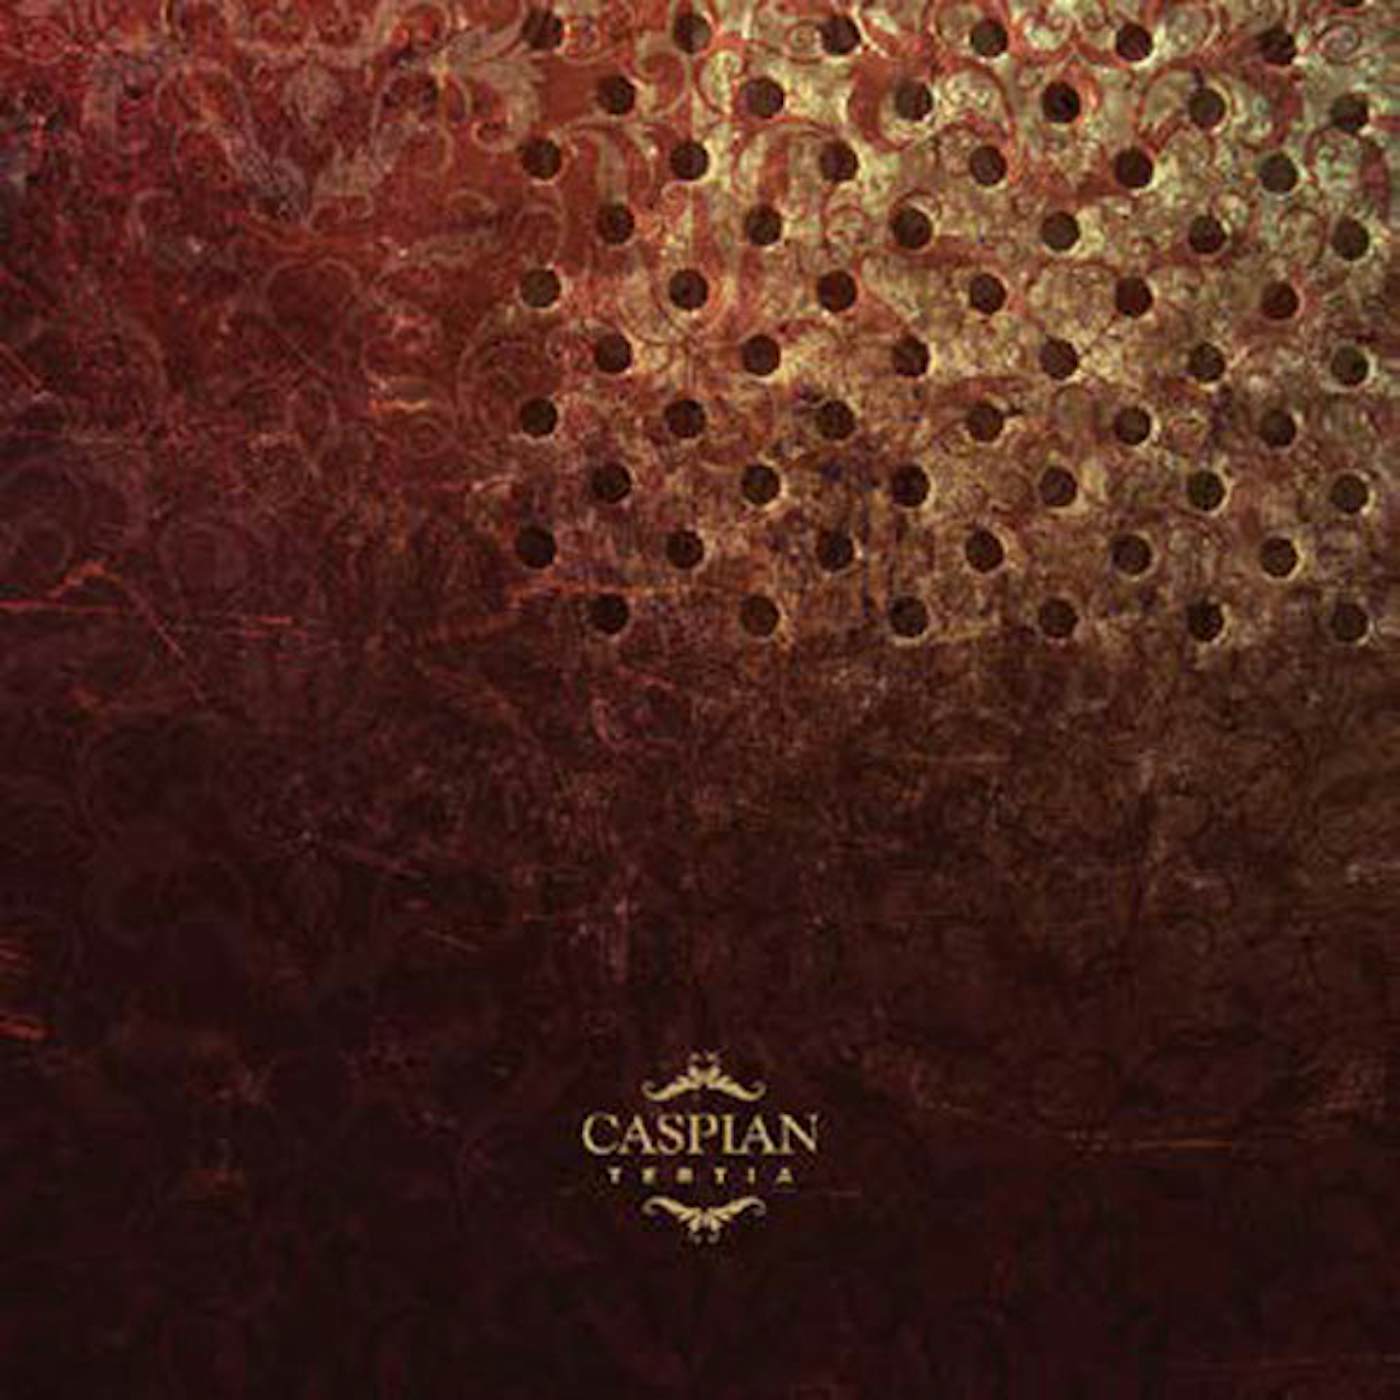 Caspian LP - Tertia (Vinyl)